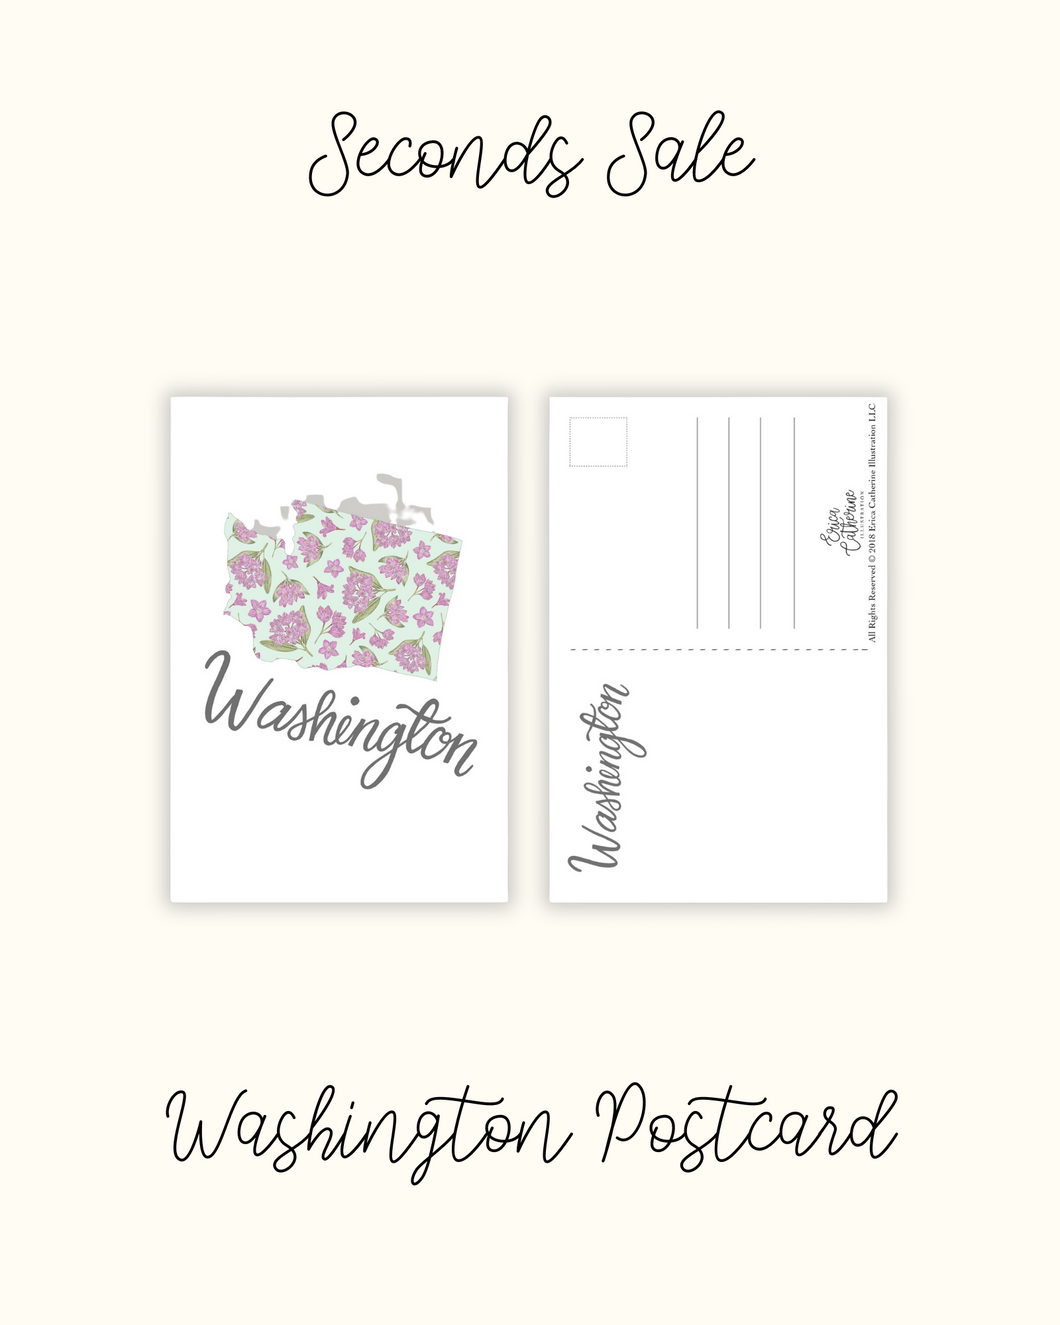 Washington State Map Postcard - Seconds Sale